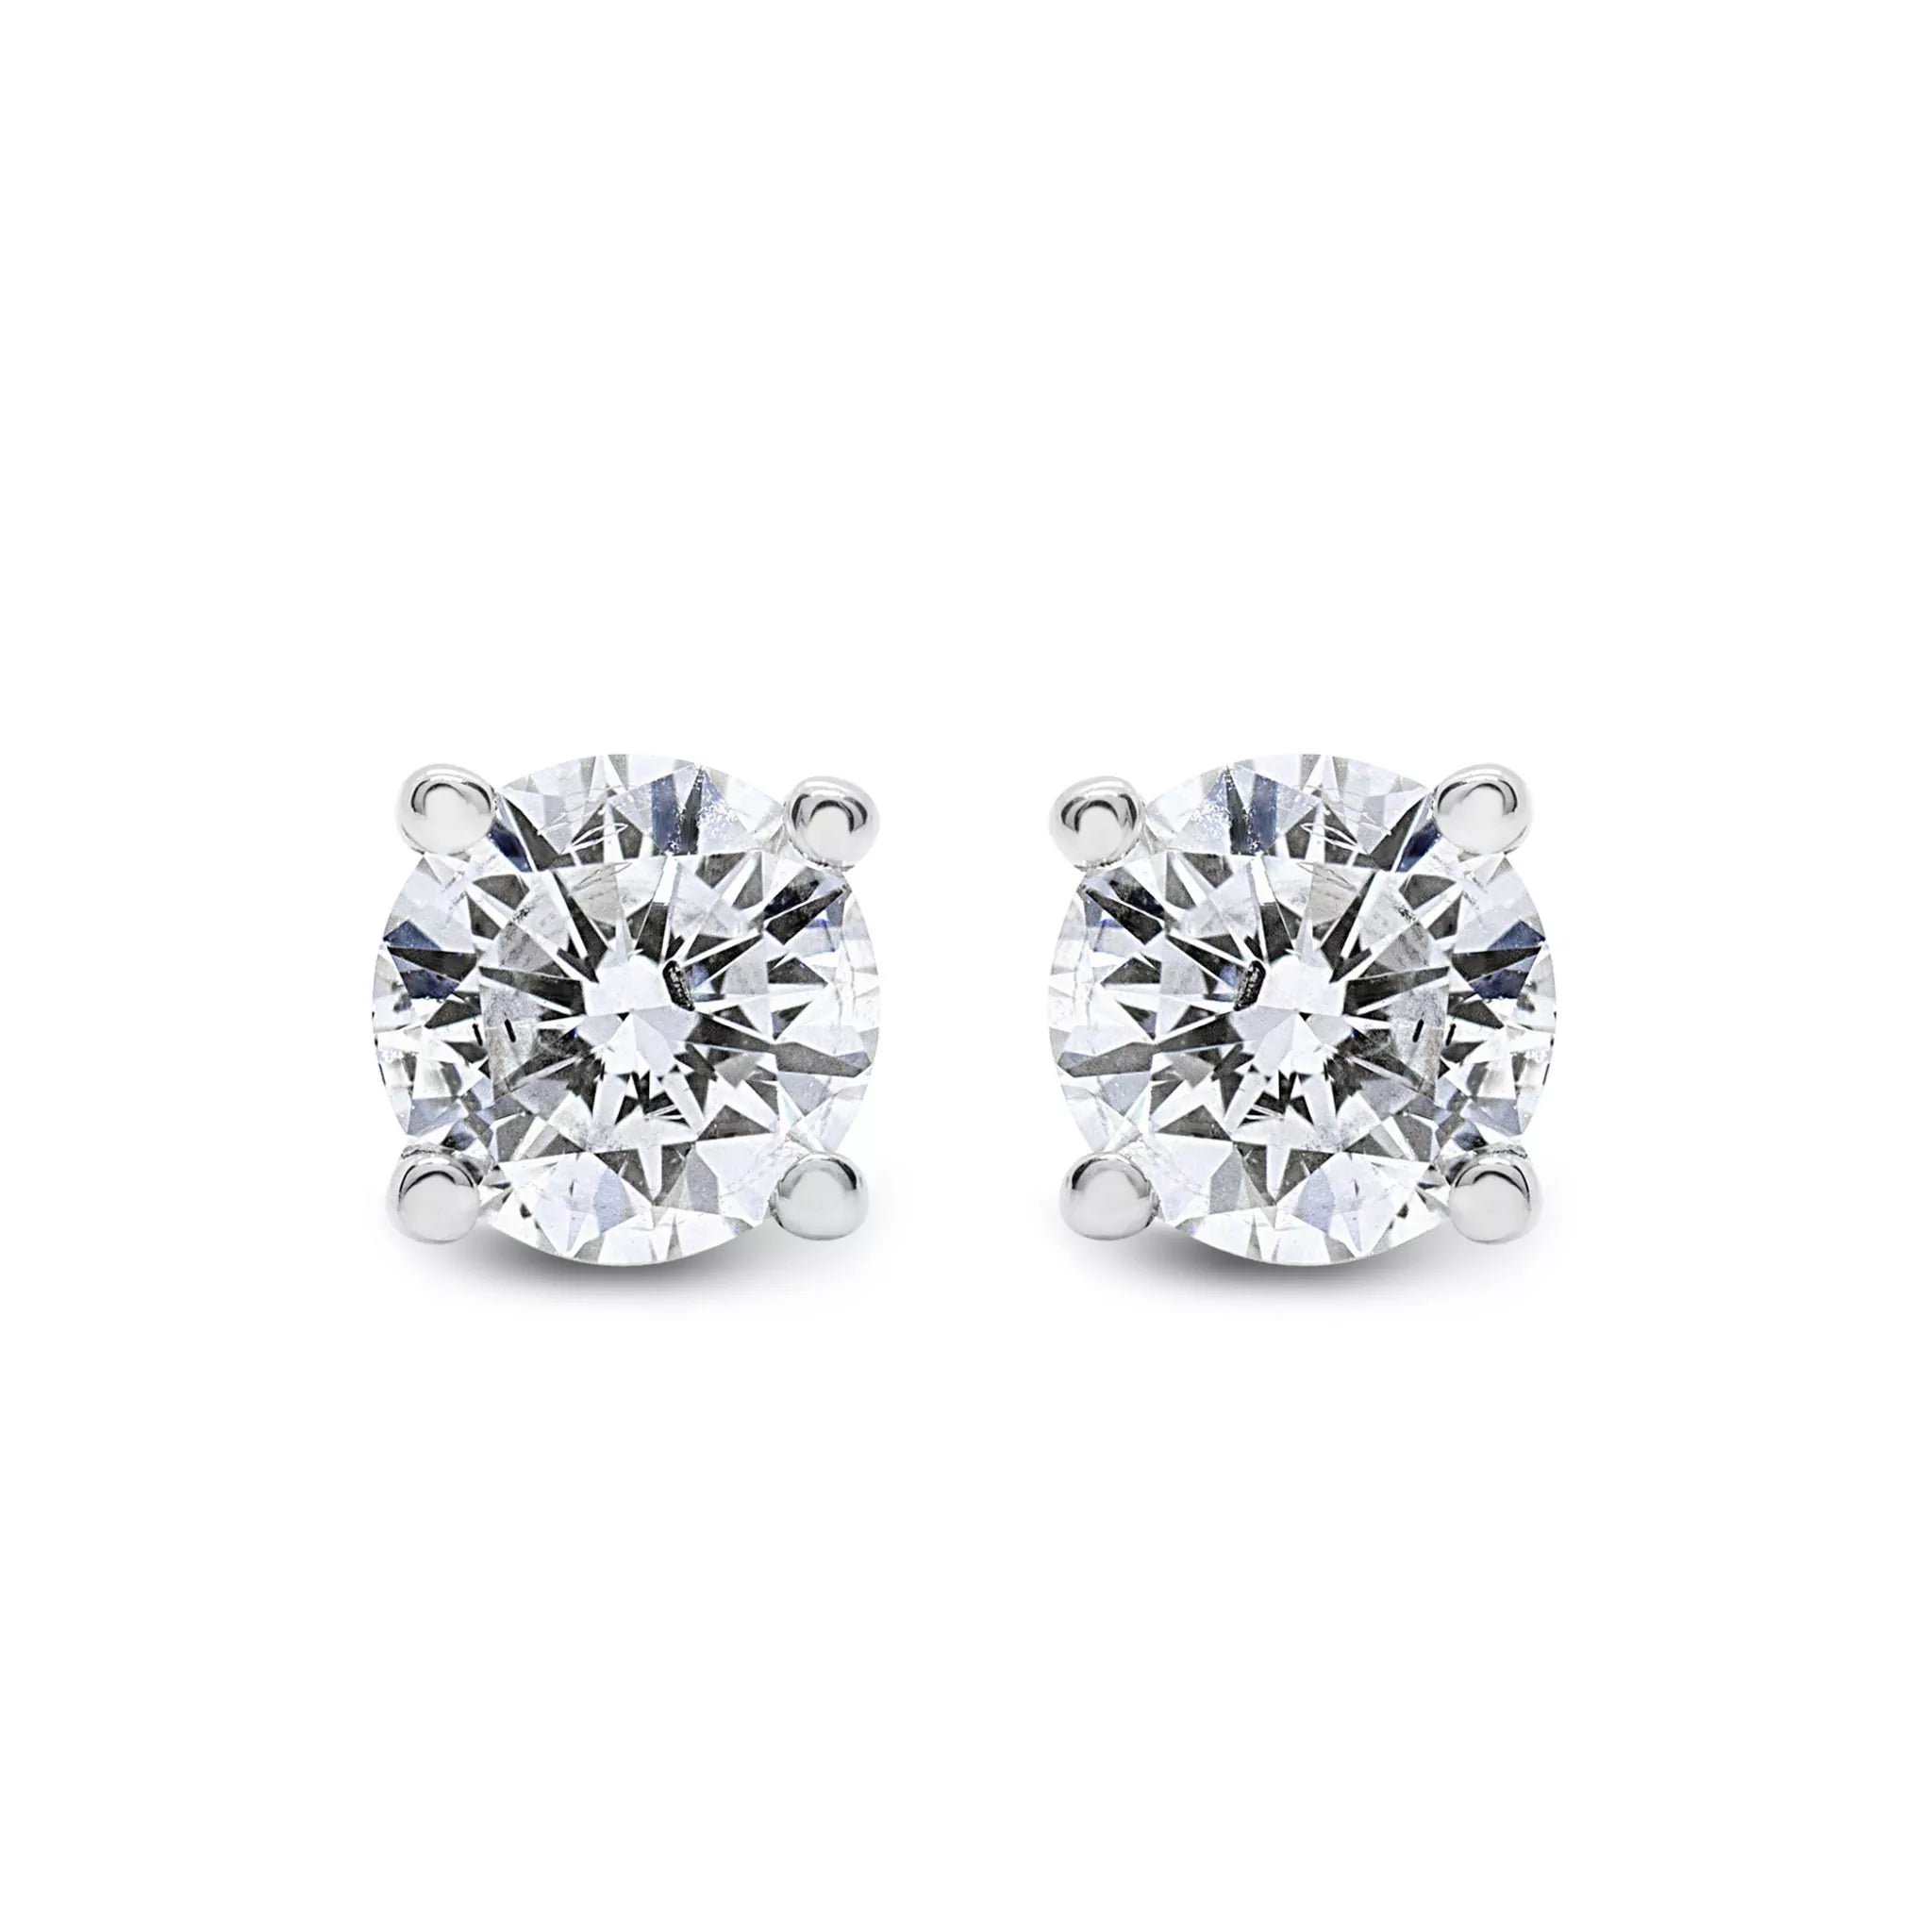 Diamond stud earrings 0.60 (ctw) in 14k white gold